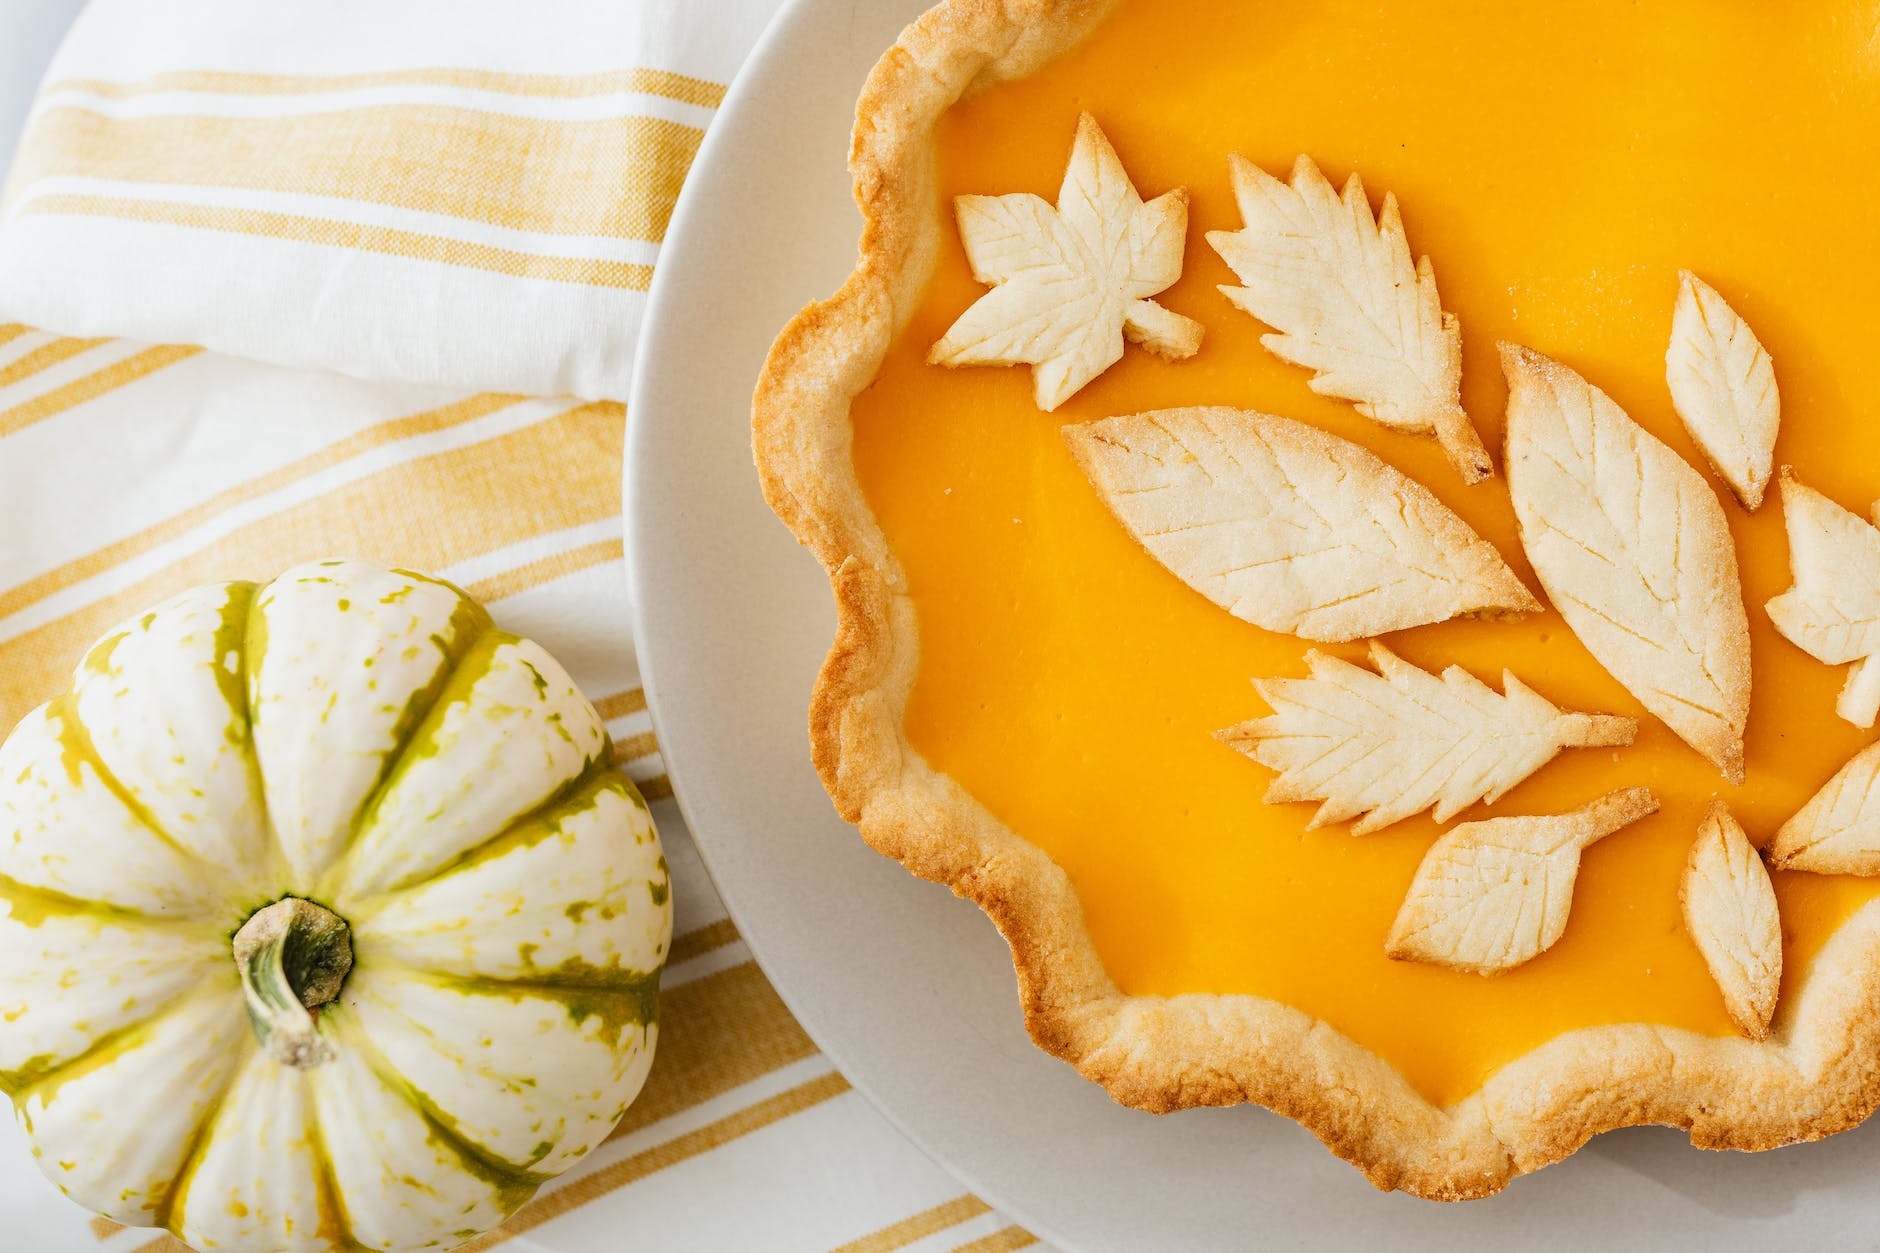 baked pumpkin pie with decorative leafy patterns design